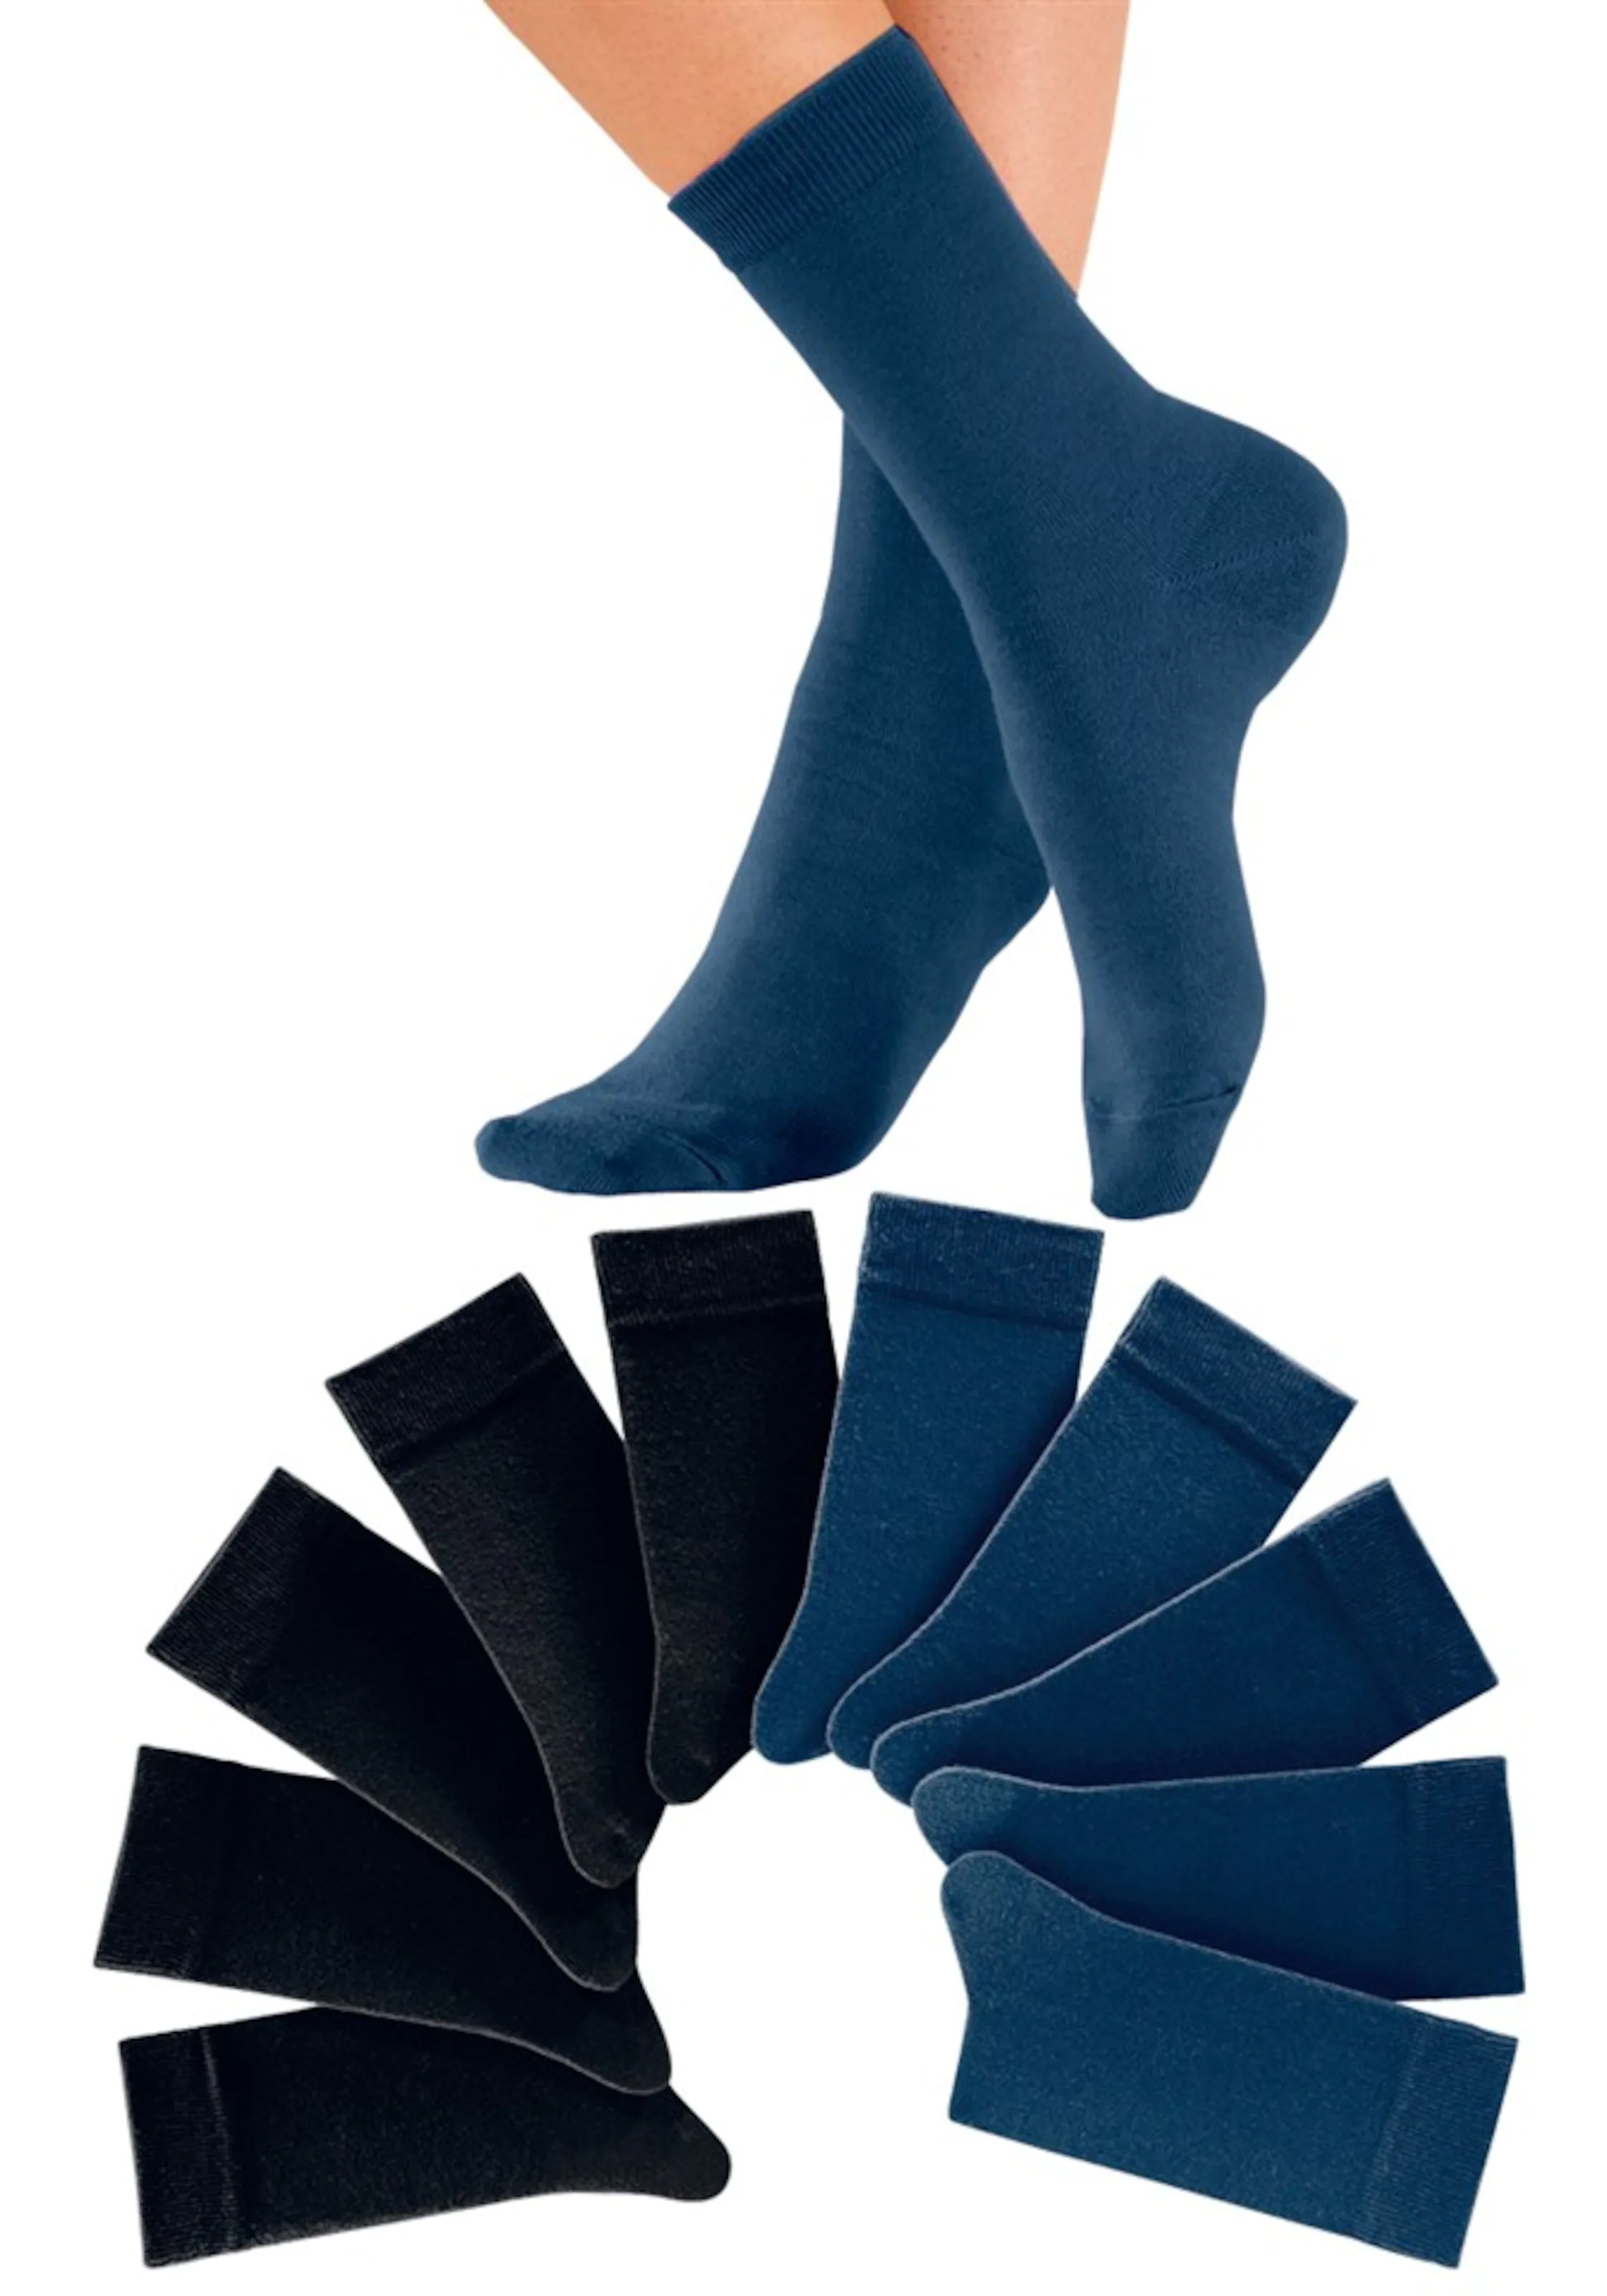 H.I.S Socken in Blau, Schwarz 